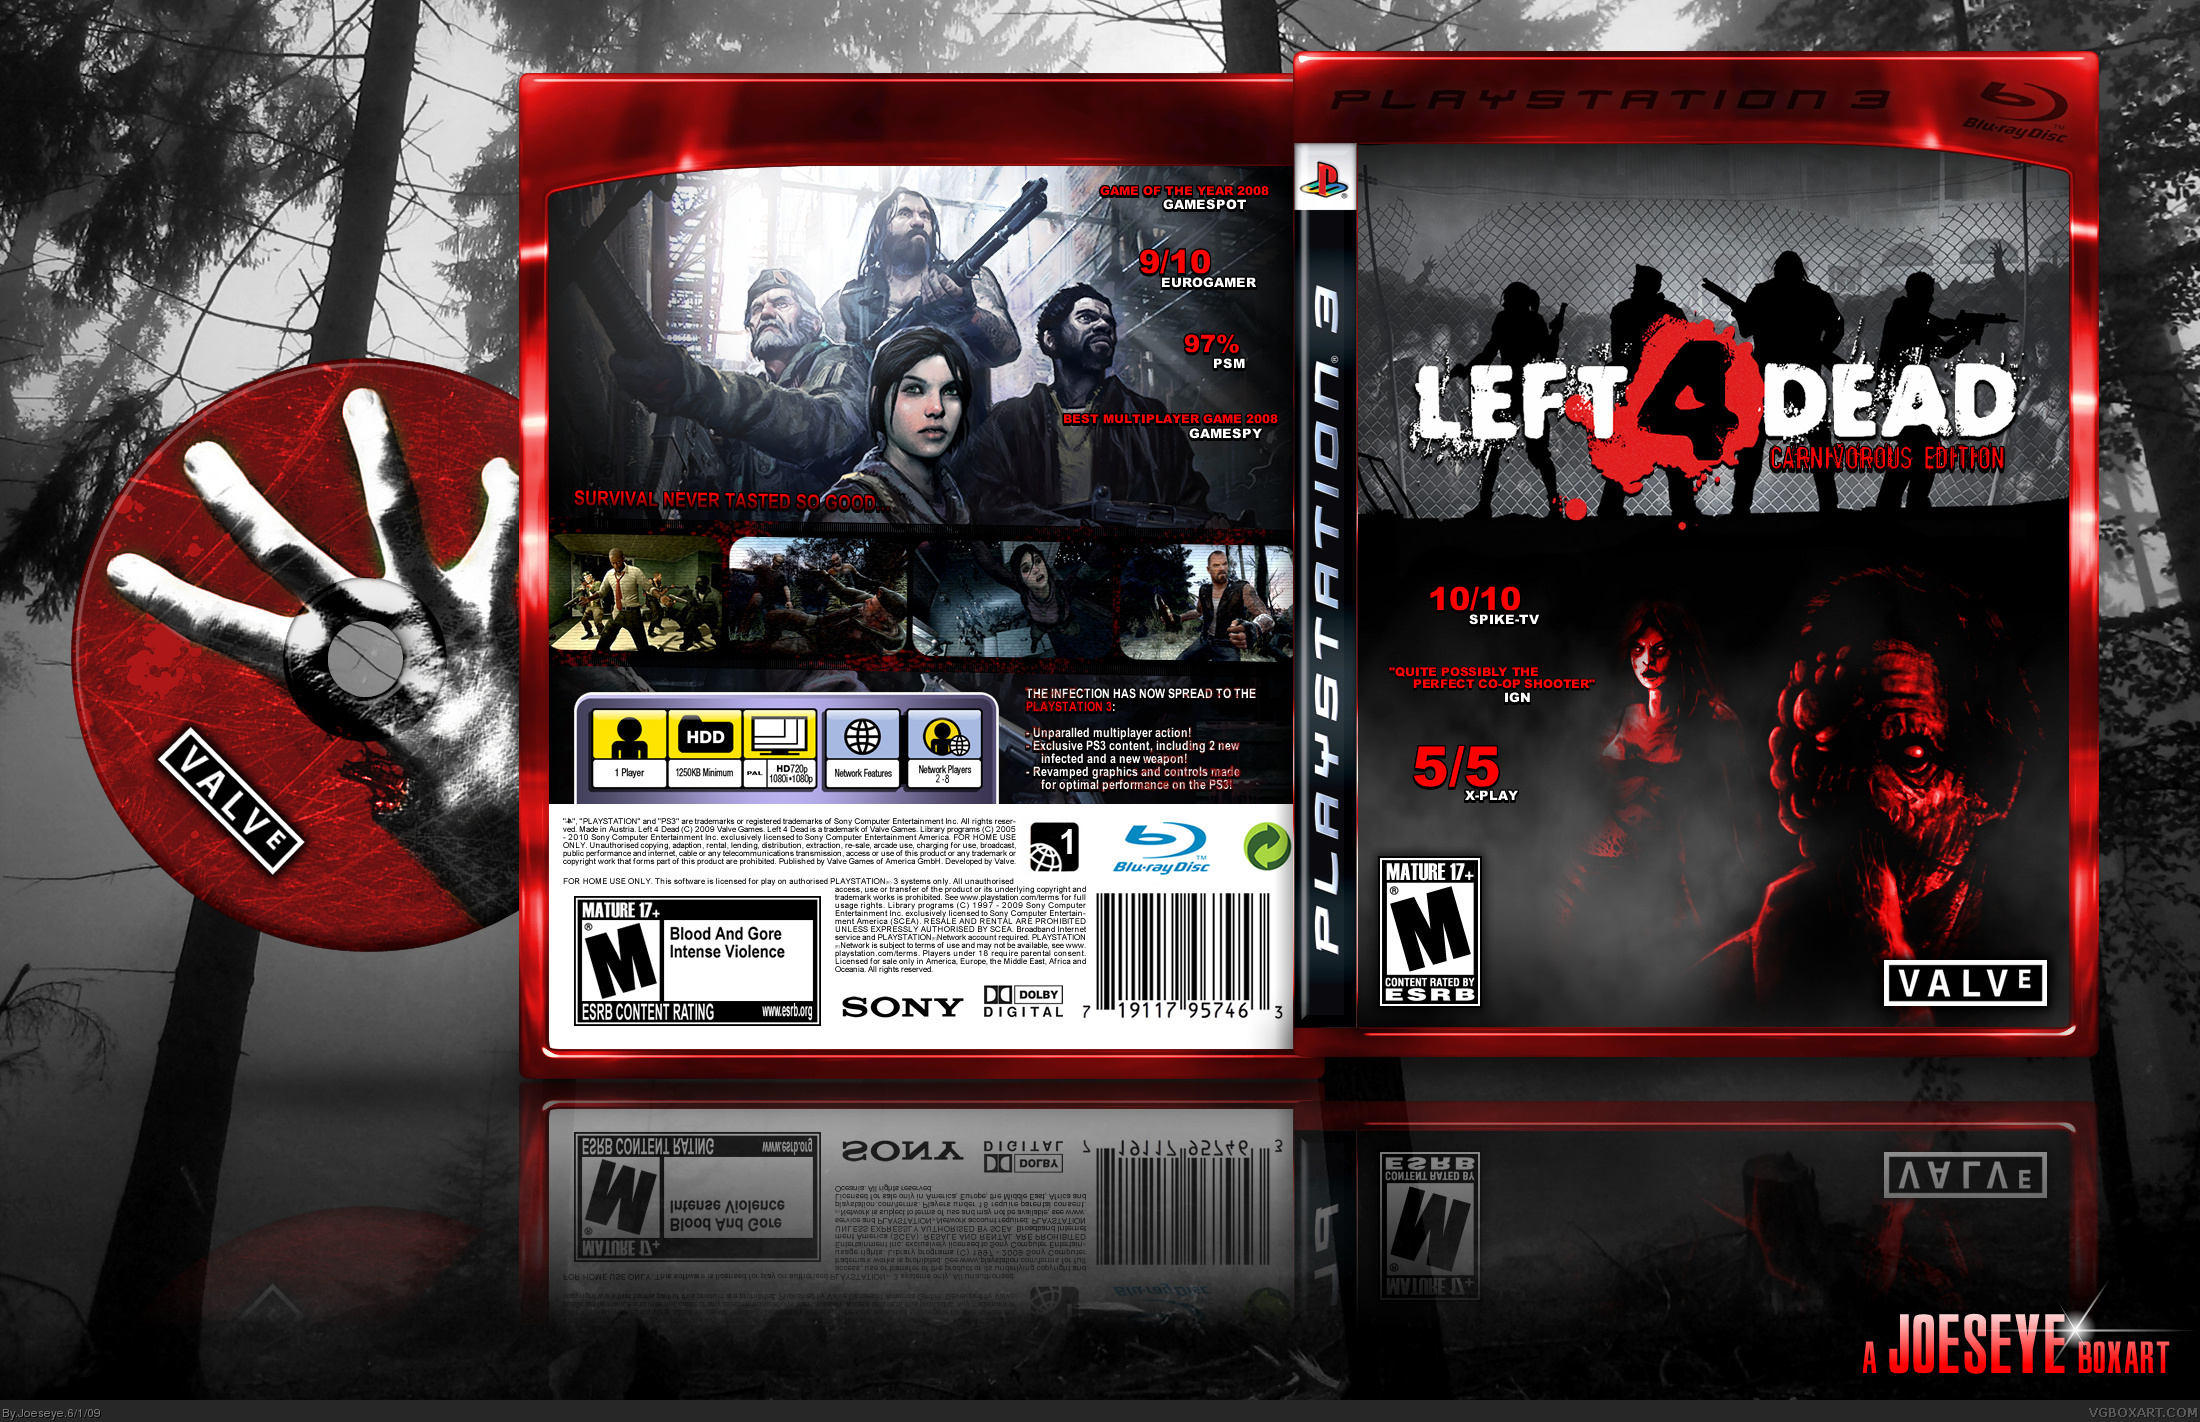 Left 4 Dead: Carnivorous Edition box cover